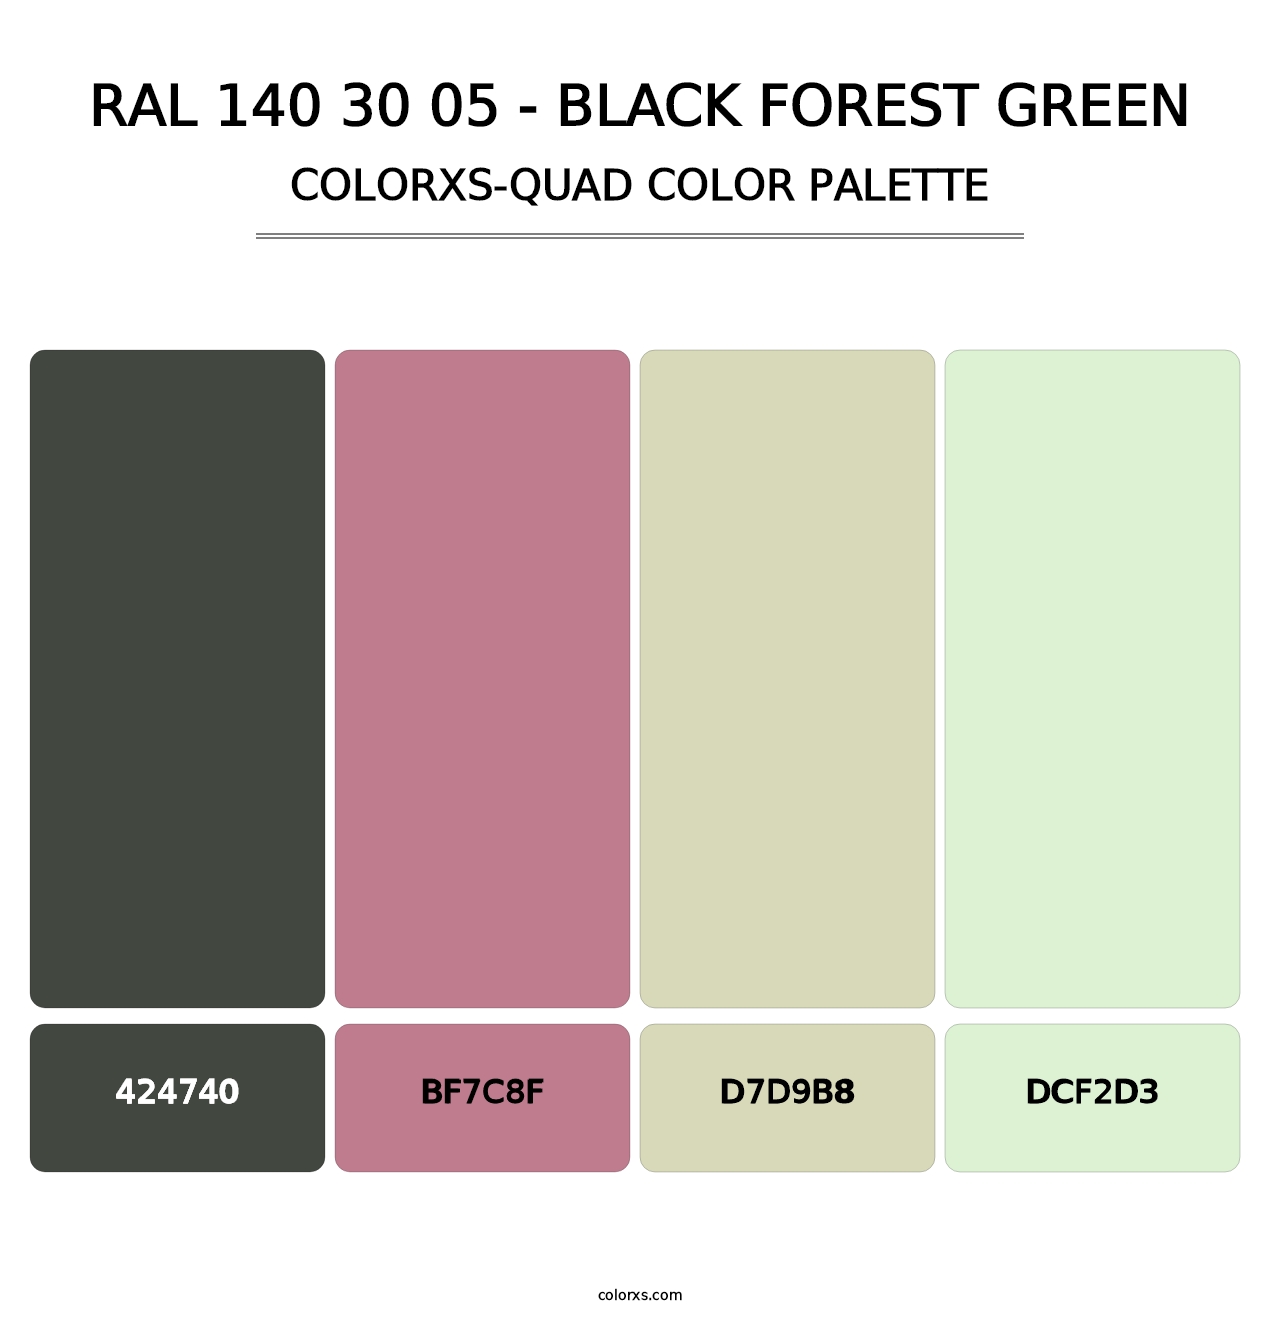 RAL 140 30 05 - Black Forest Green - Colorxs Quad Palette